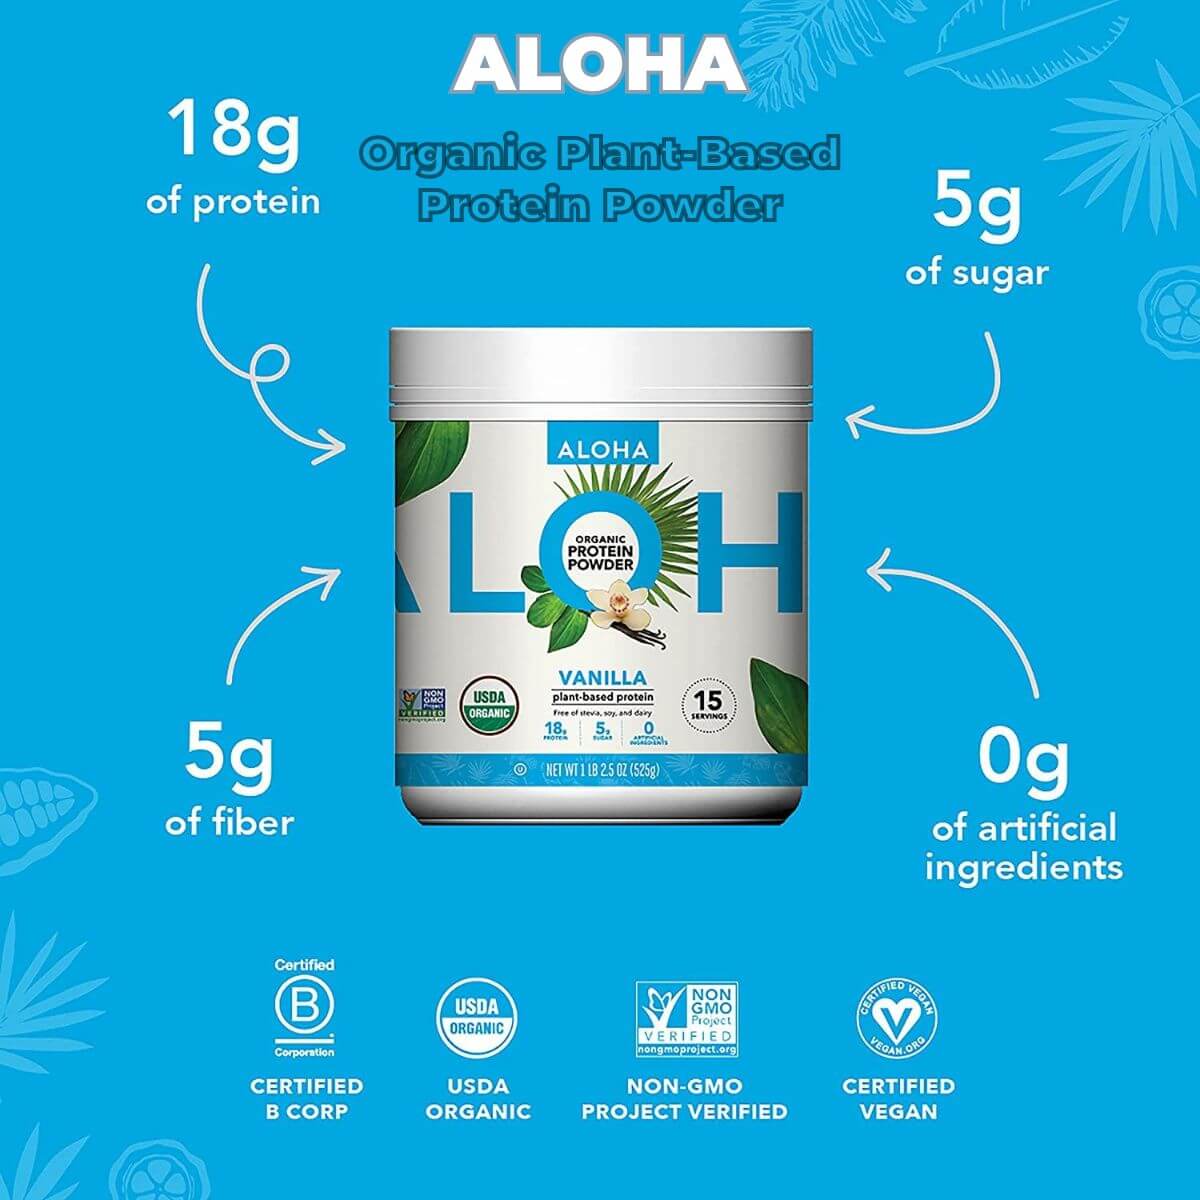 ALOHA Organic Plant-Based Protein Powder- Women's Top Vegan Protein Powders